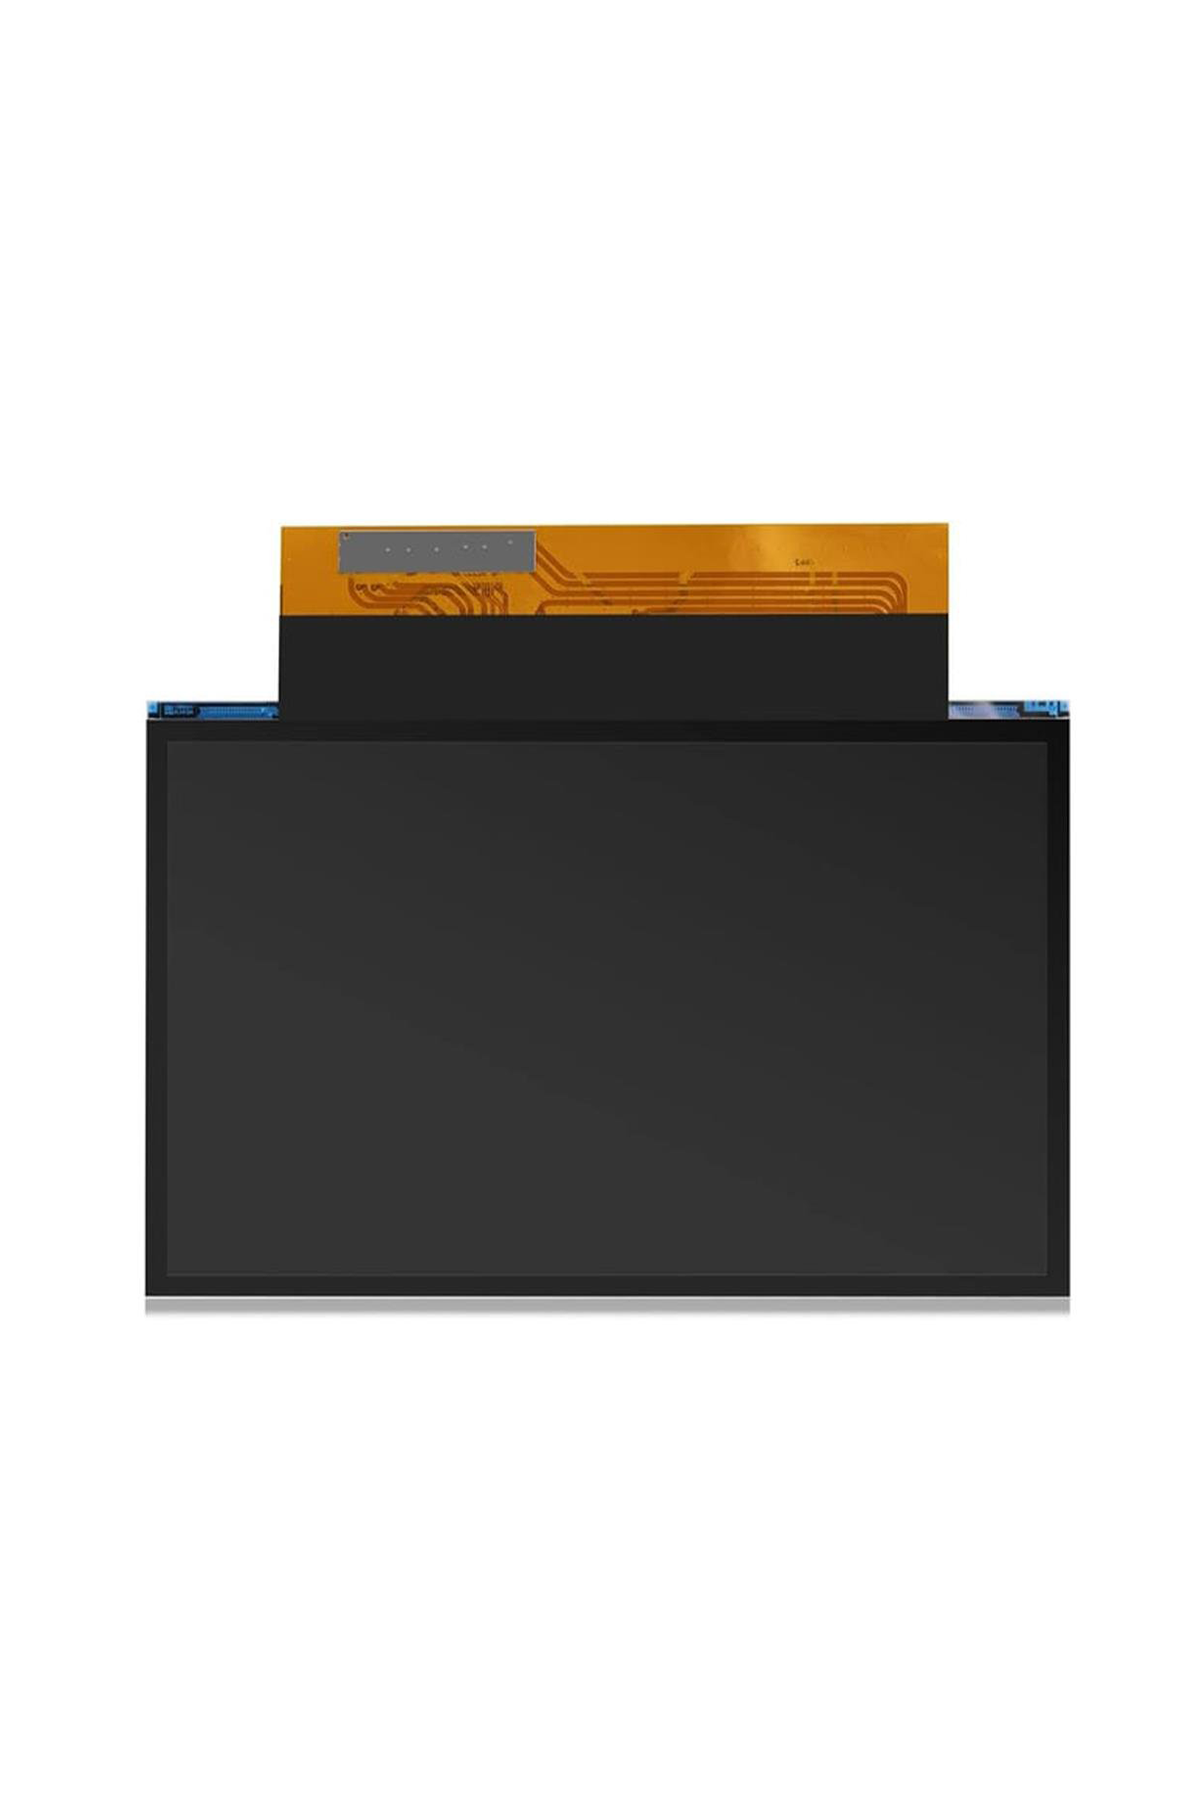 ELEGOO 6.6'' 4K LCD - Mars 3 Pro